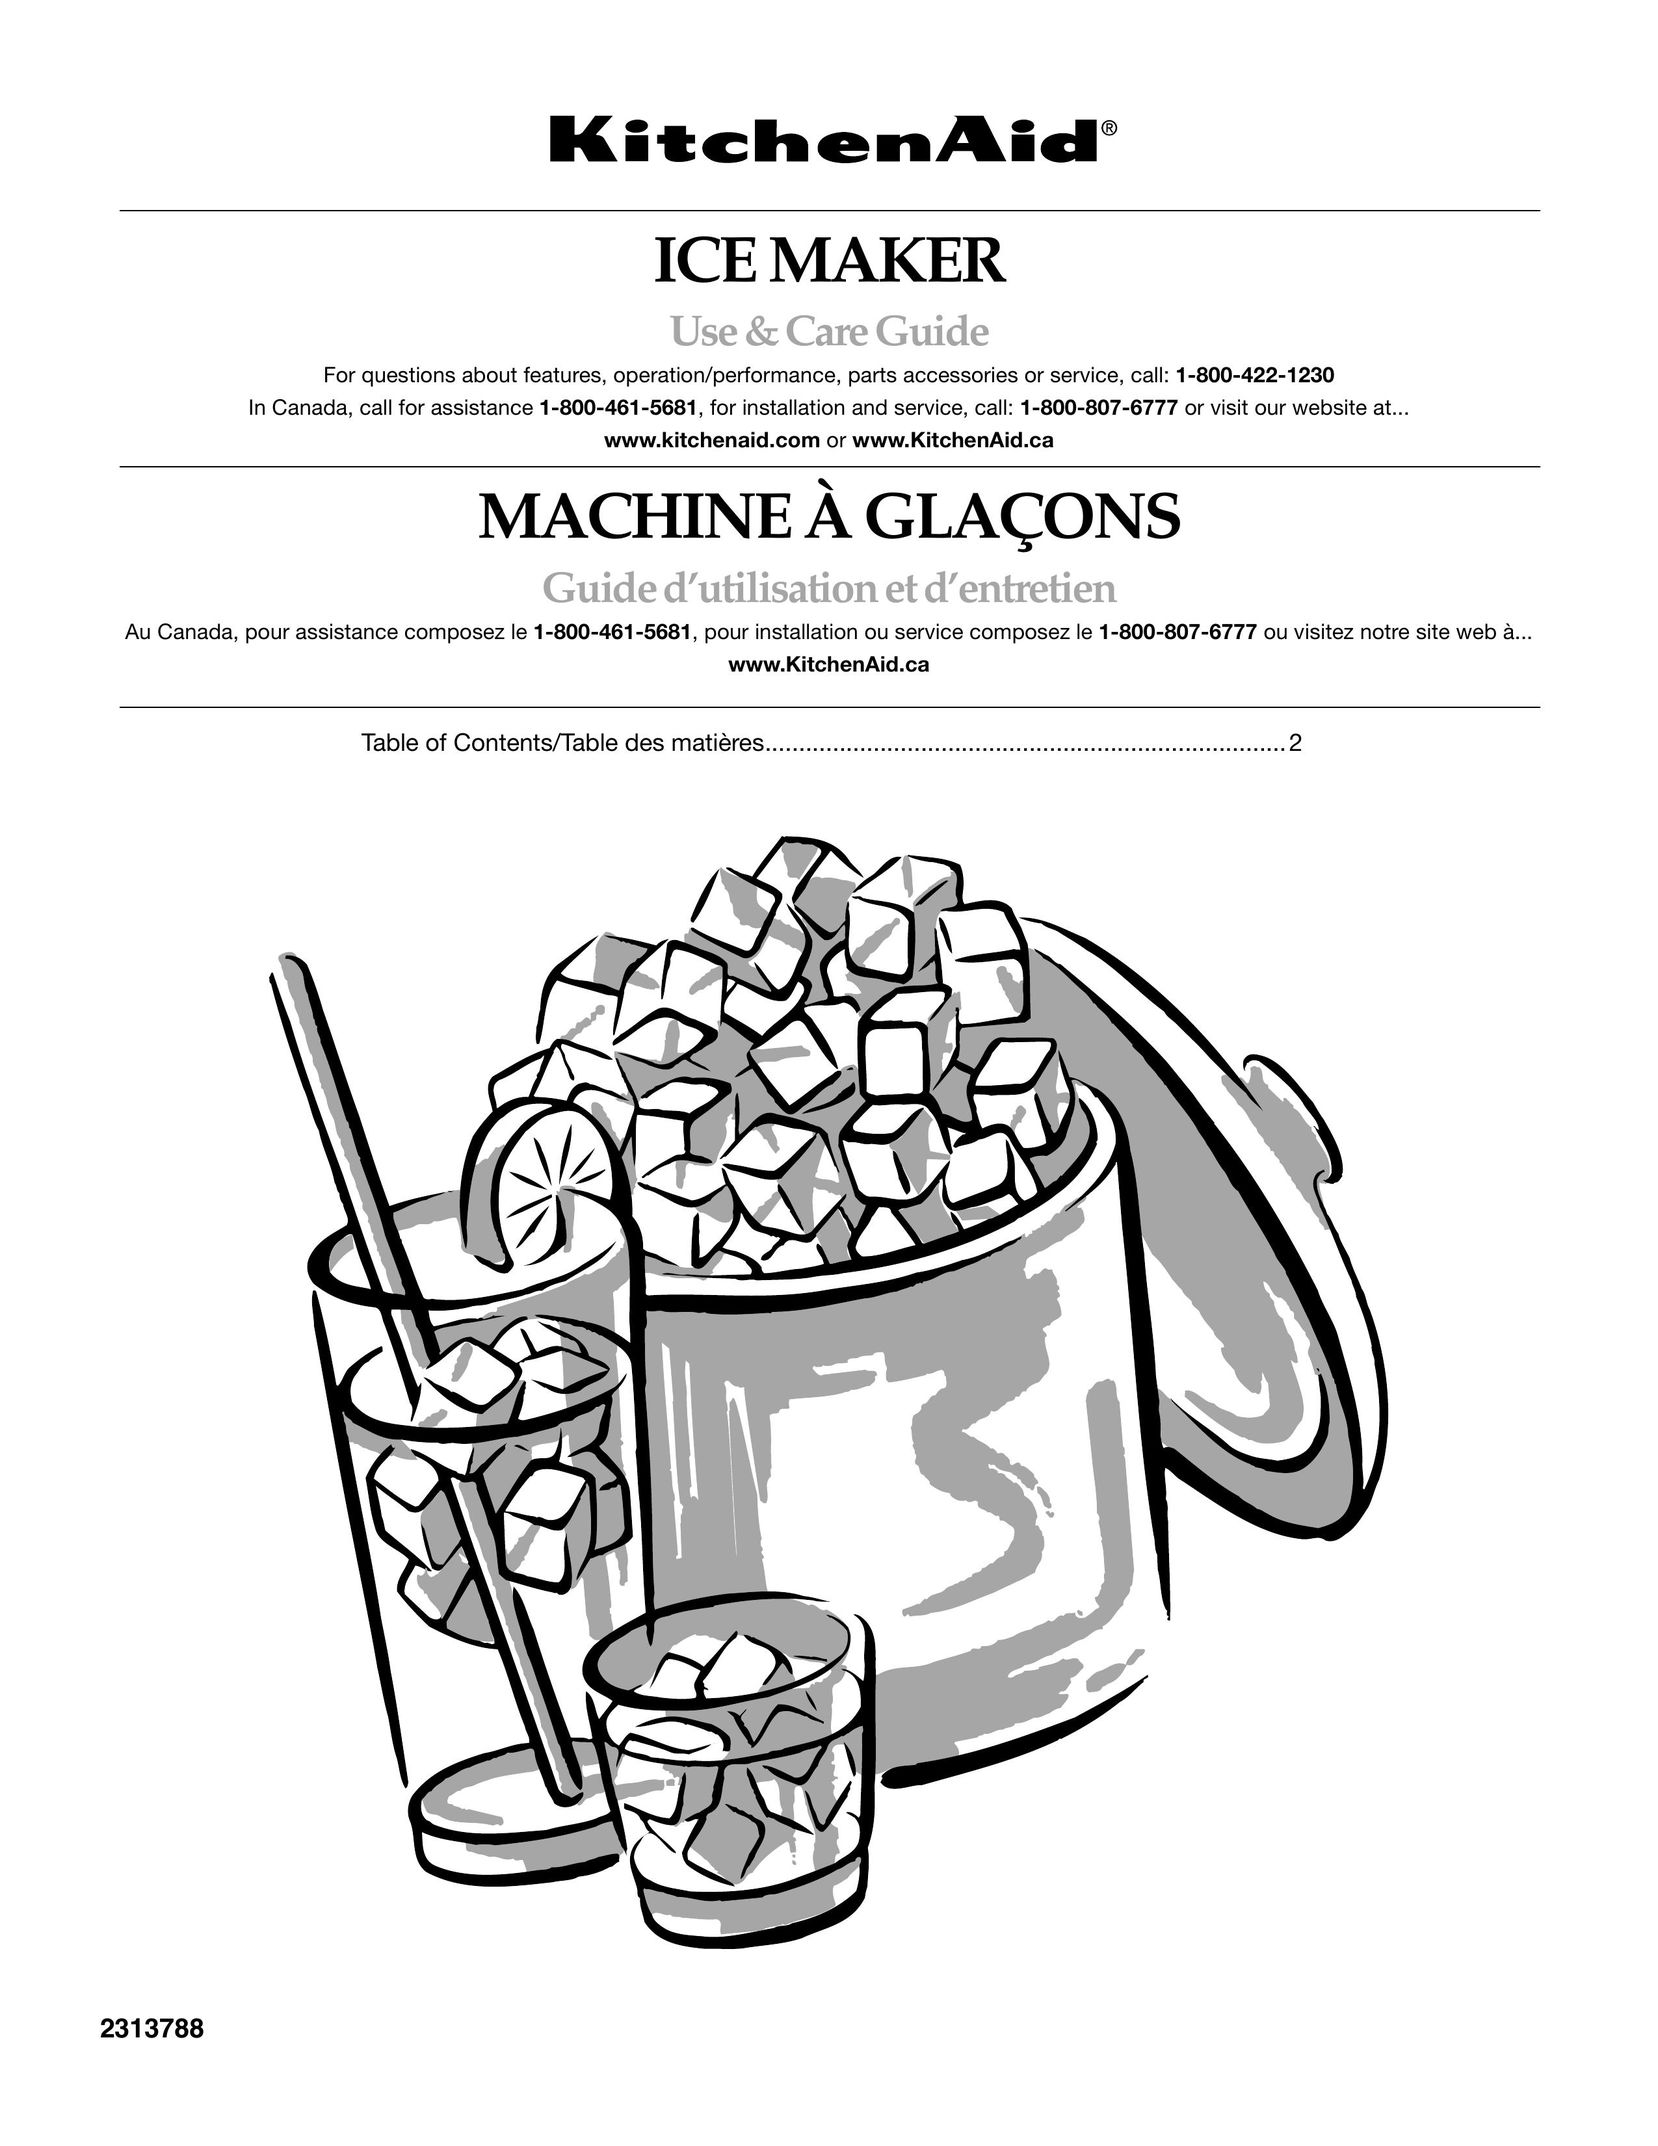 KitchenAid ICEMAKER Ice Maker User Manual